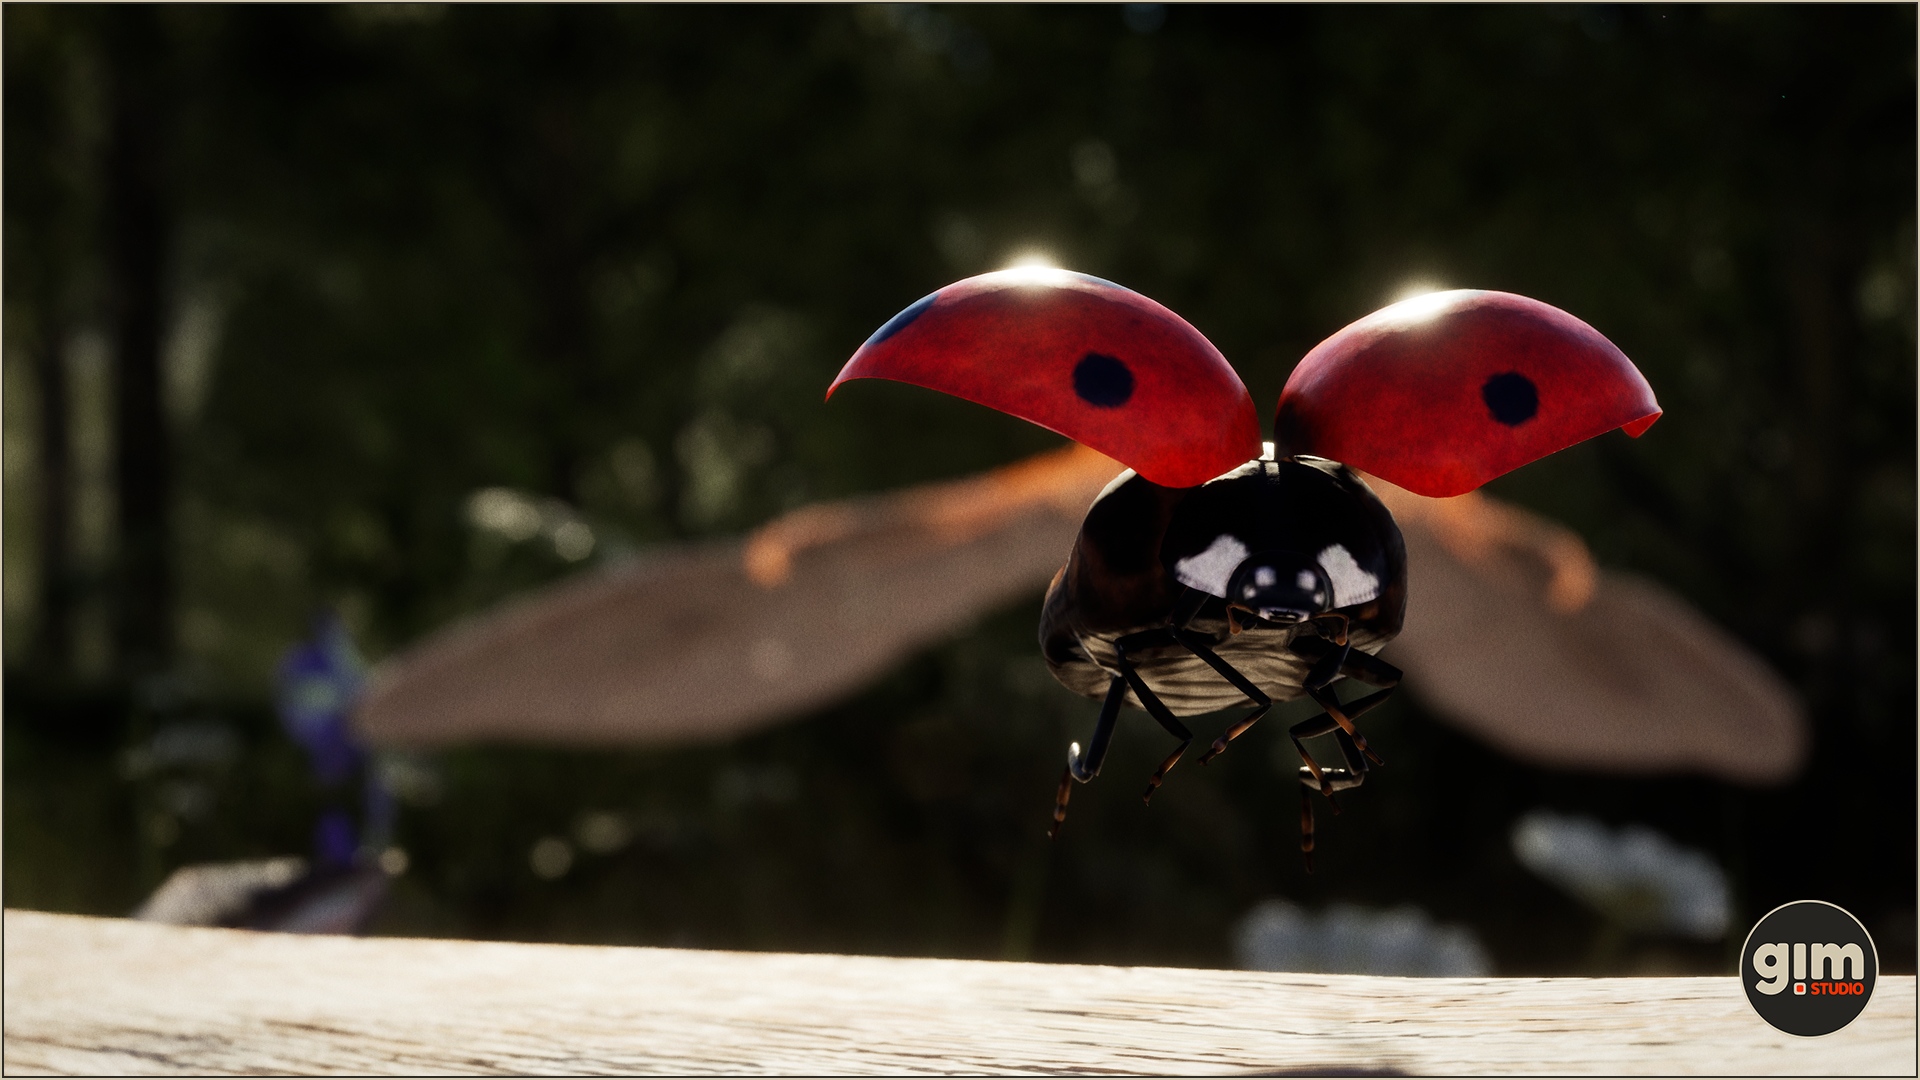 Ladybug landing on a piece of wood